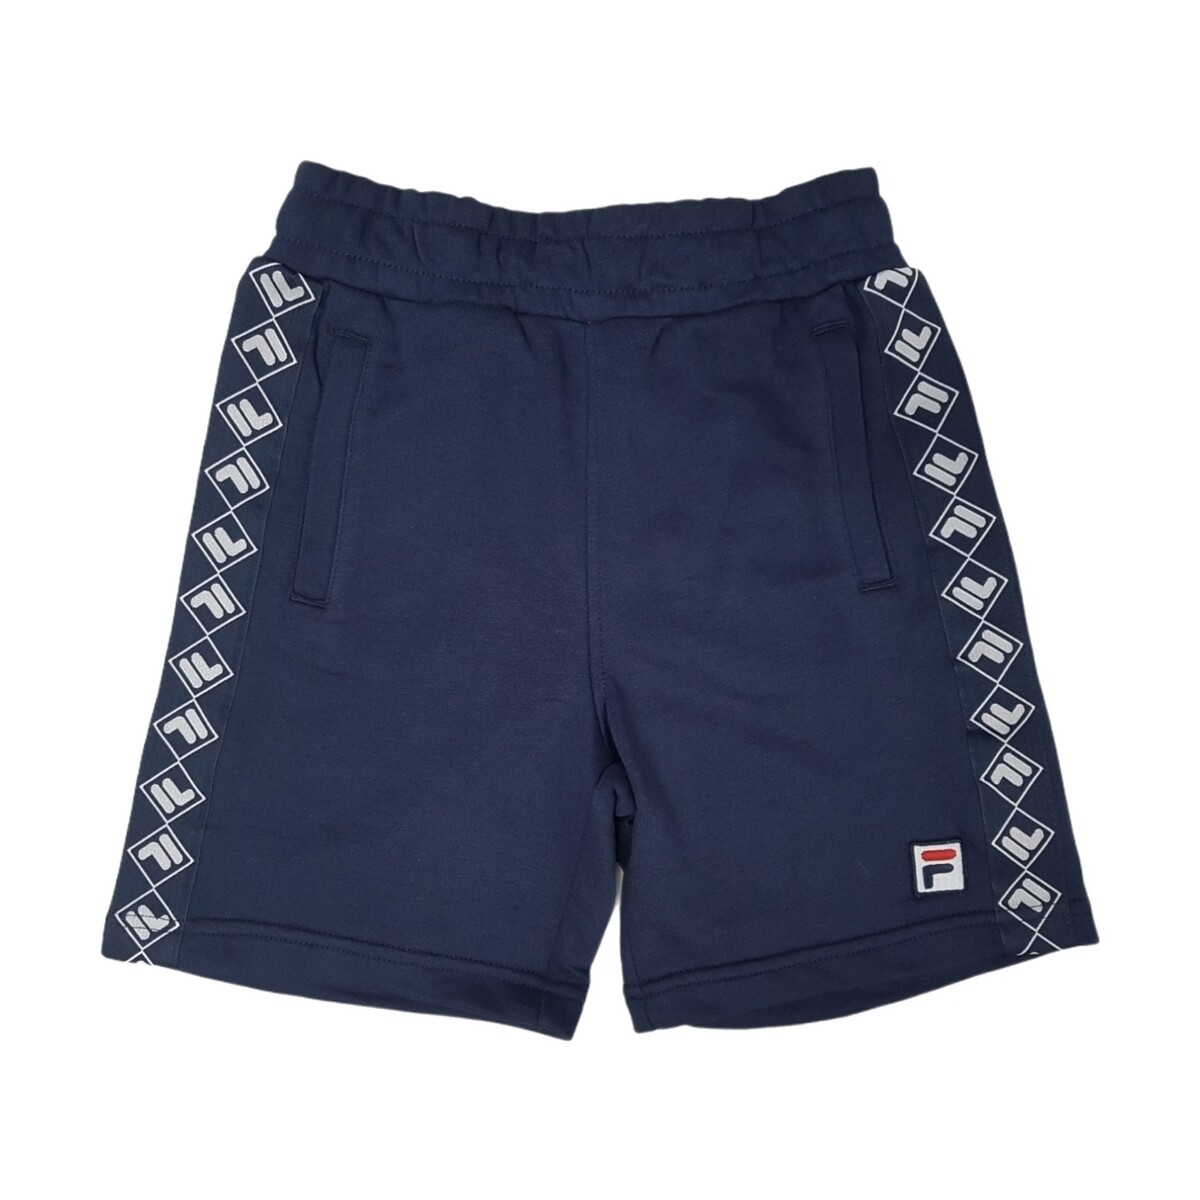 Vêtements Garçon Shorts / Bermudas Fila 688702 Bleu